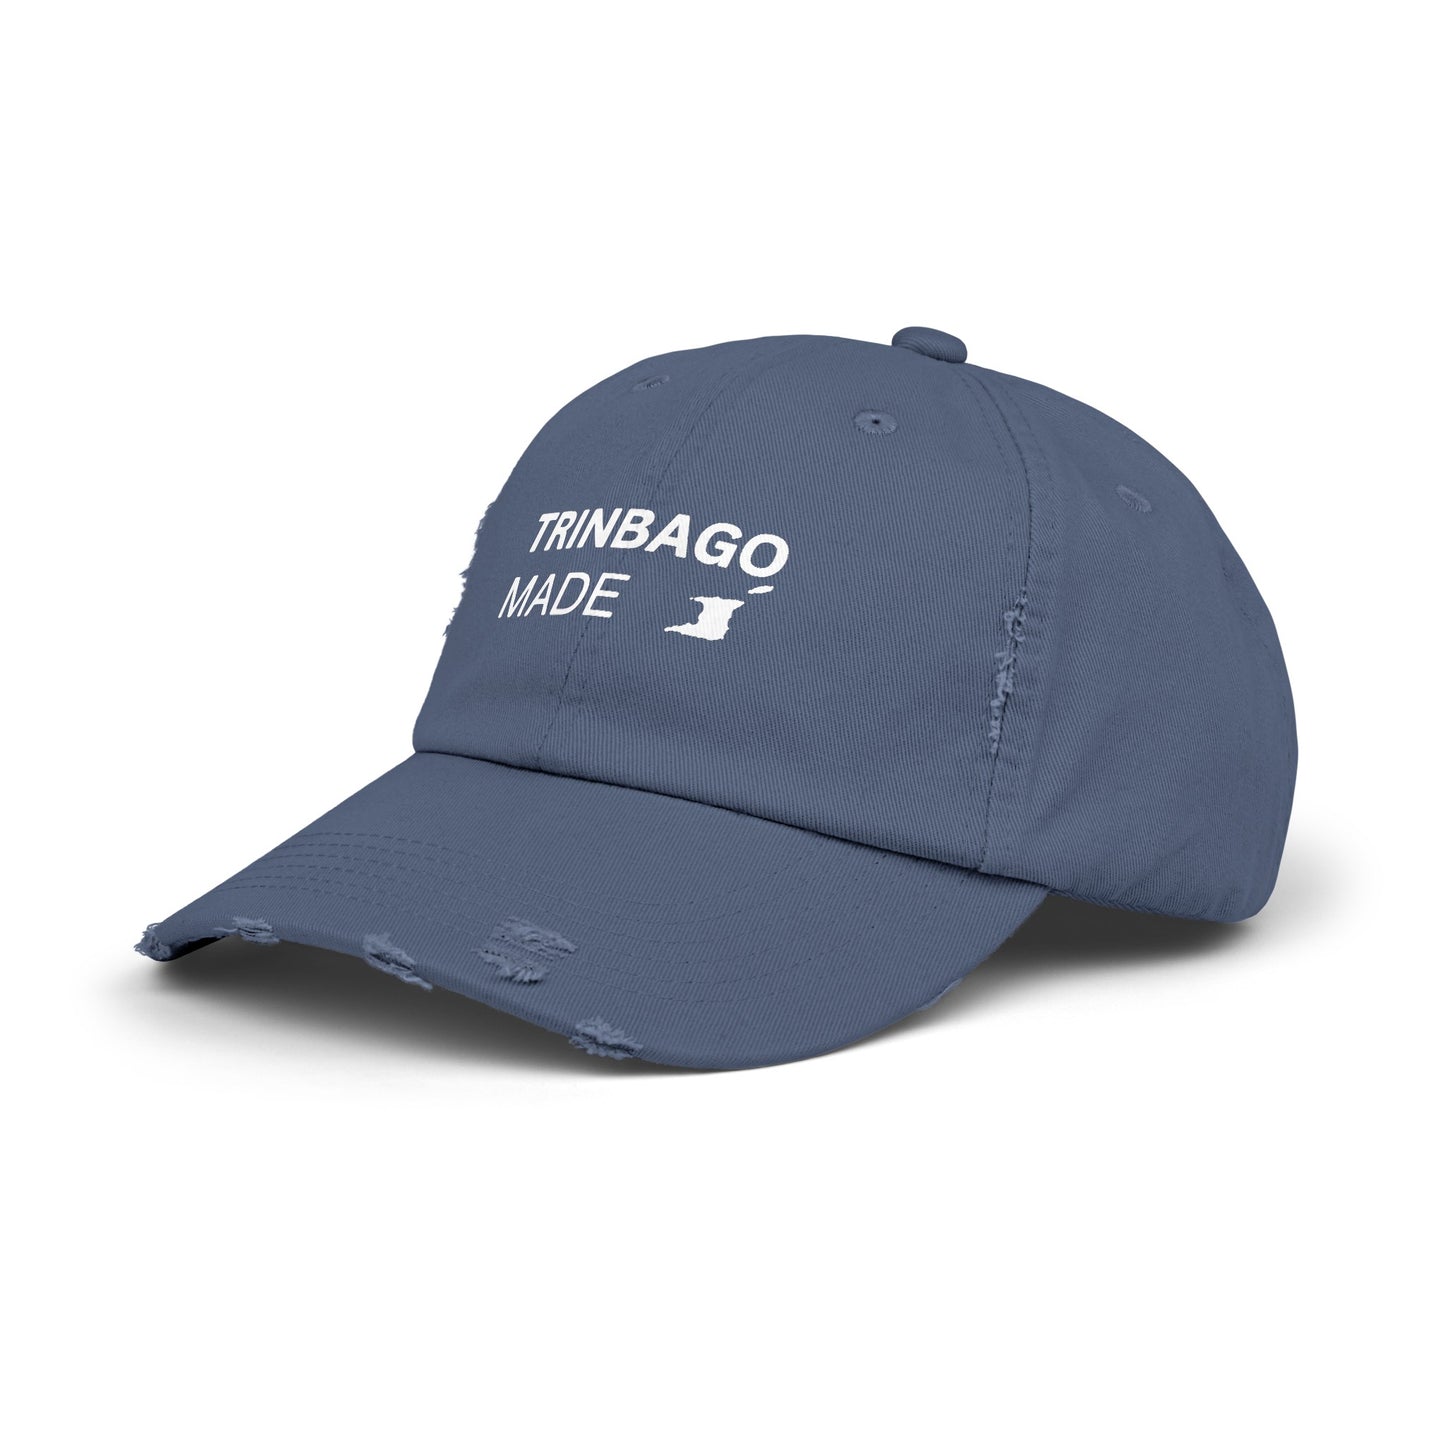 Trinbago Made Distressed Cap